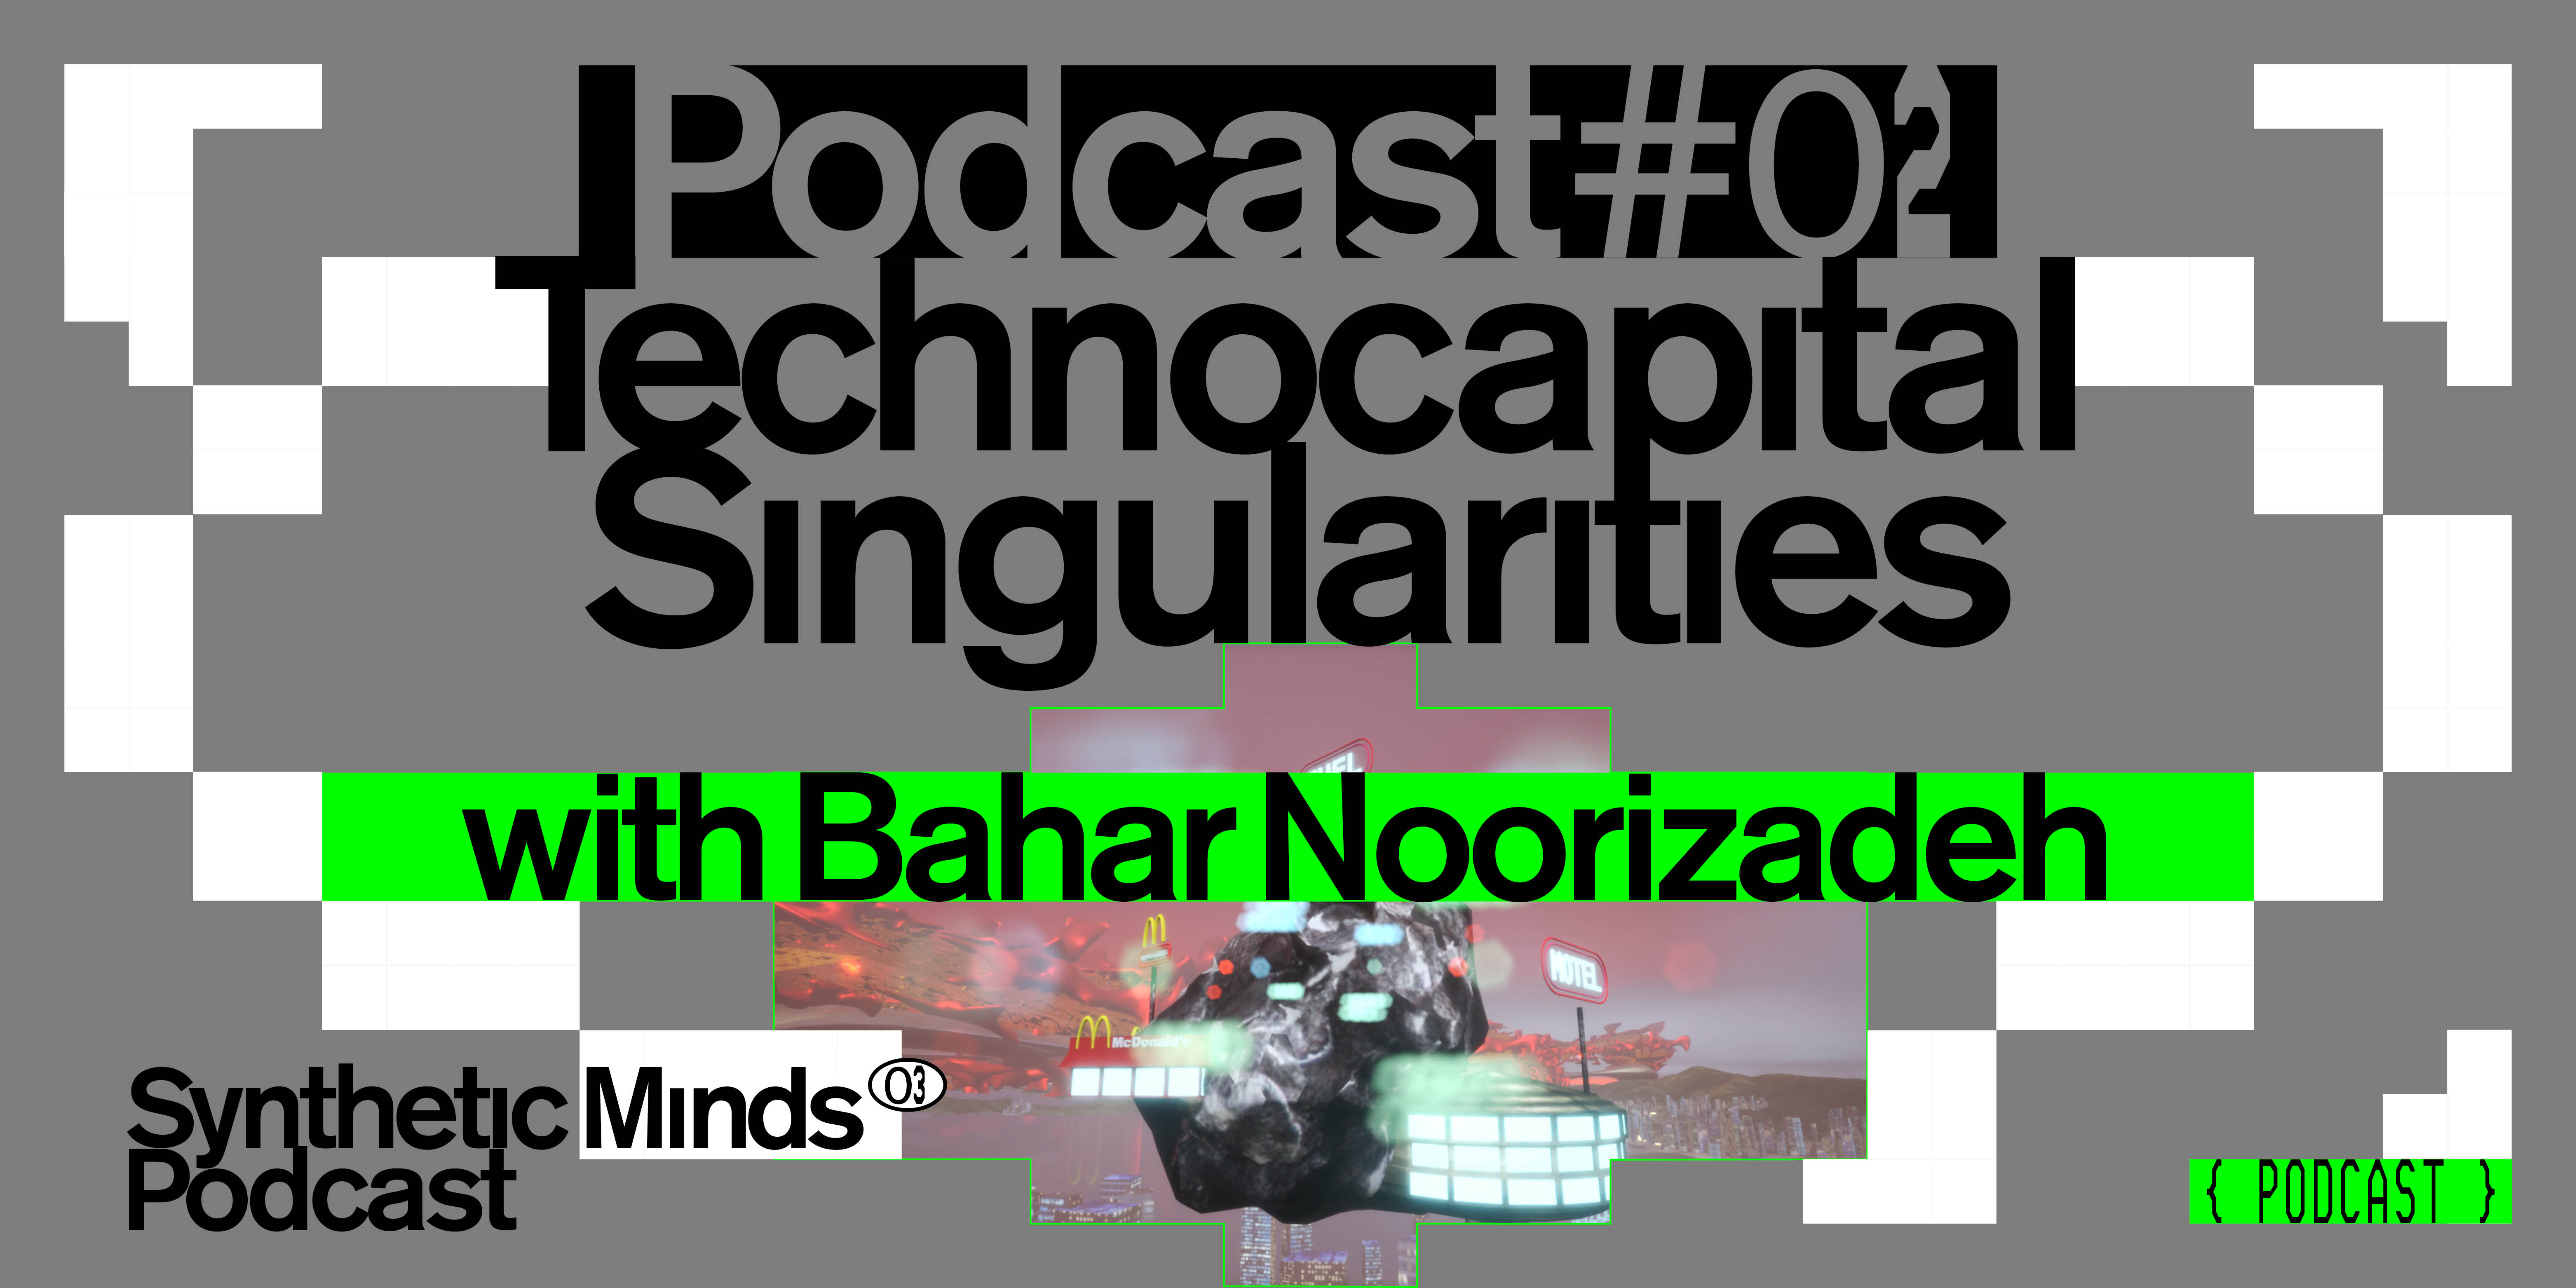 Synthetic Minds Podcast #02: Technocapital Singularities ...